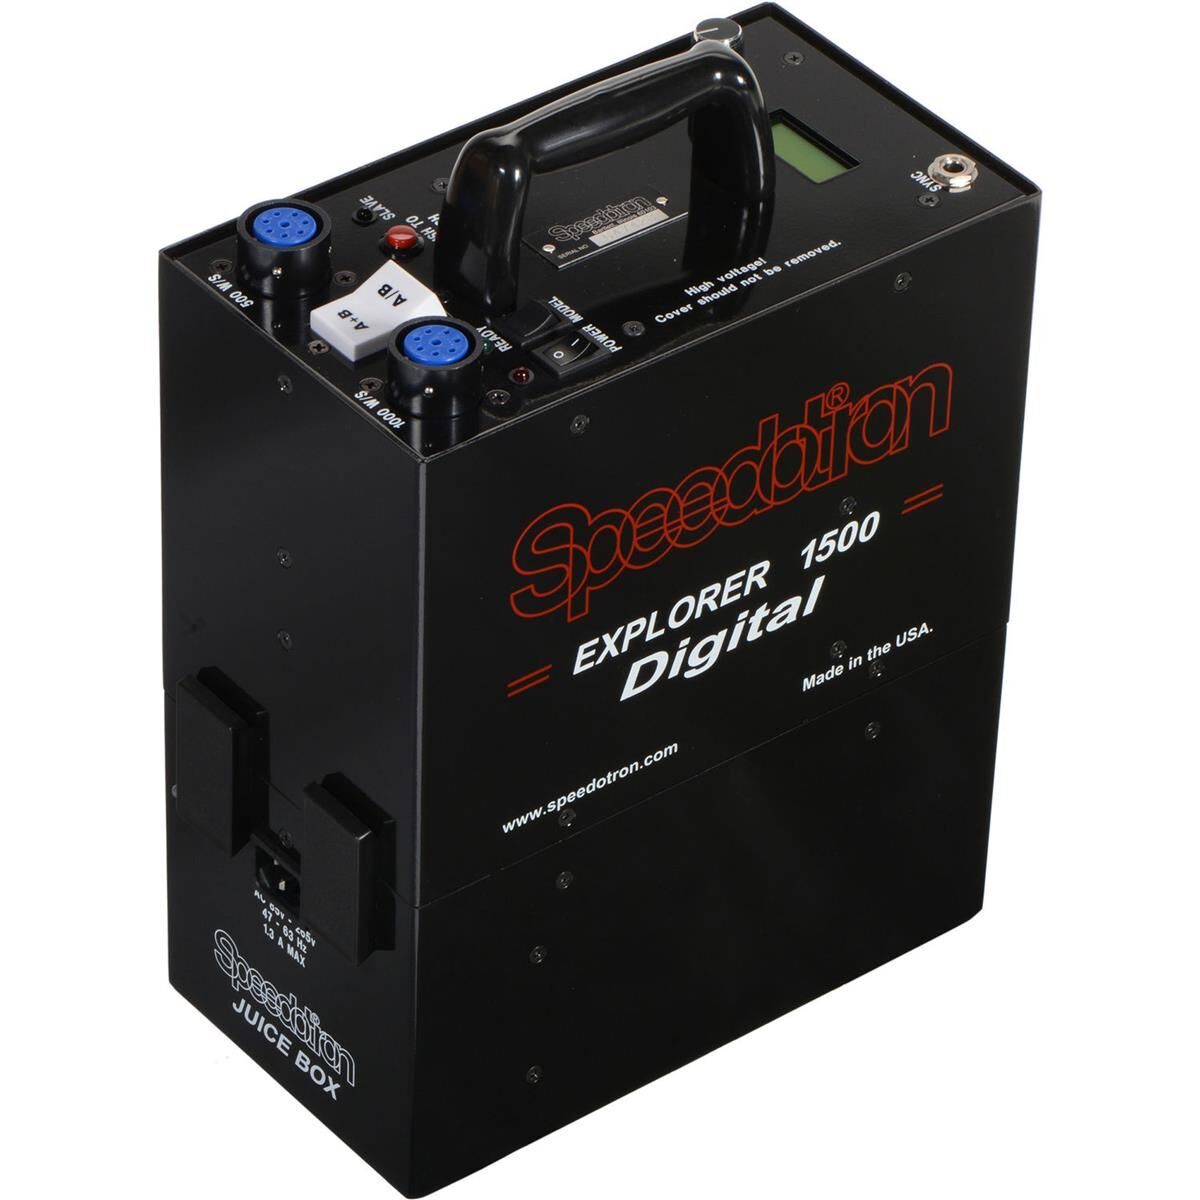 Speedotron Black Line Explorer 1500 Watt Second Portable Battery Power Supply